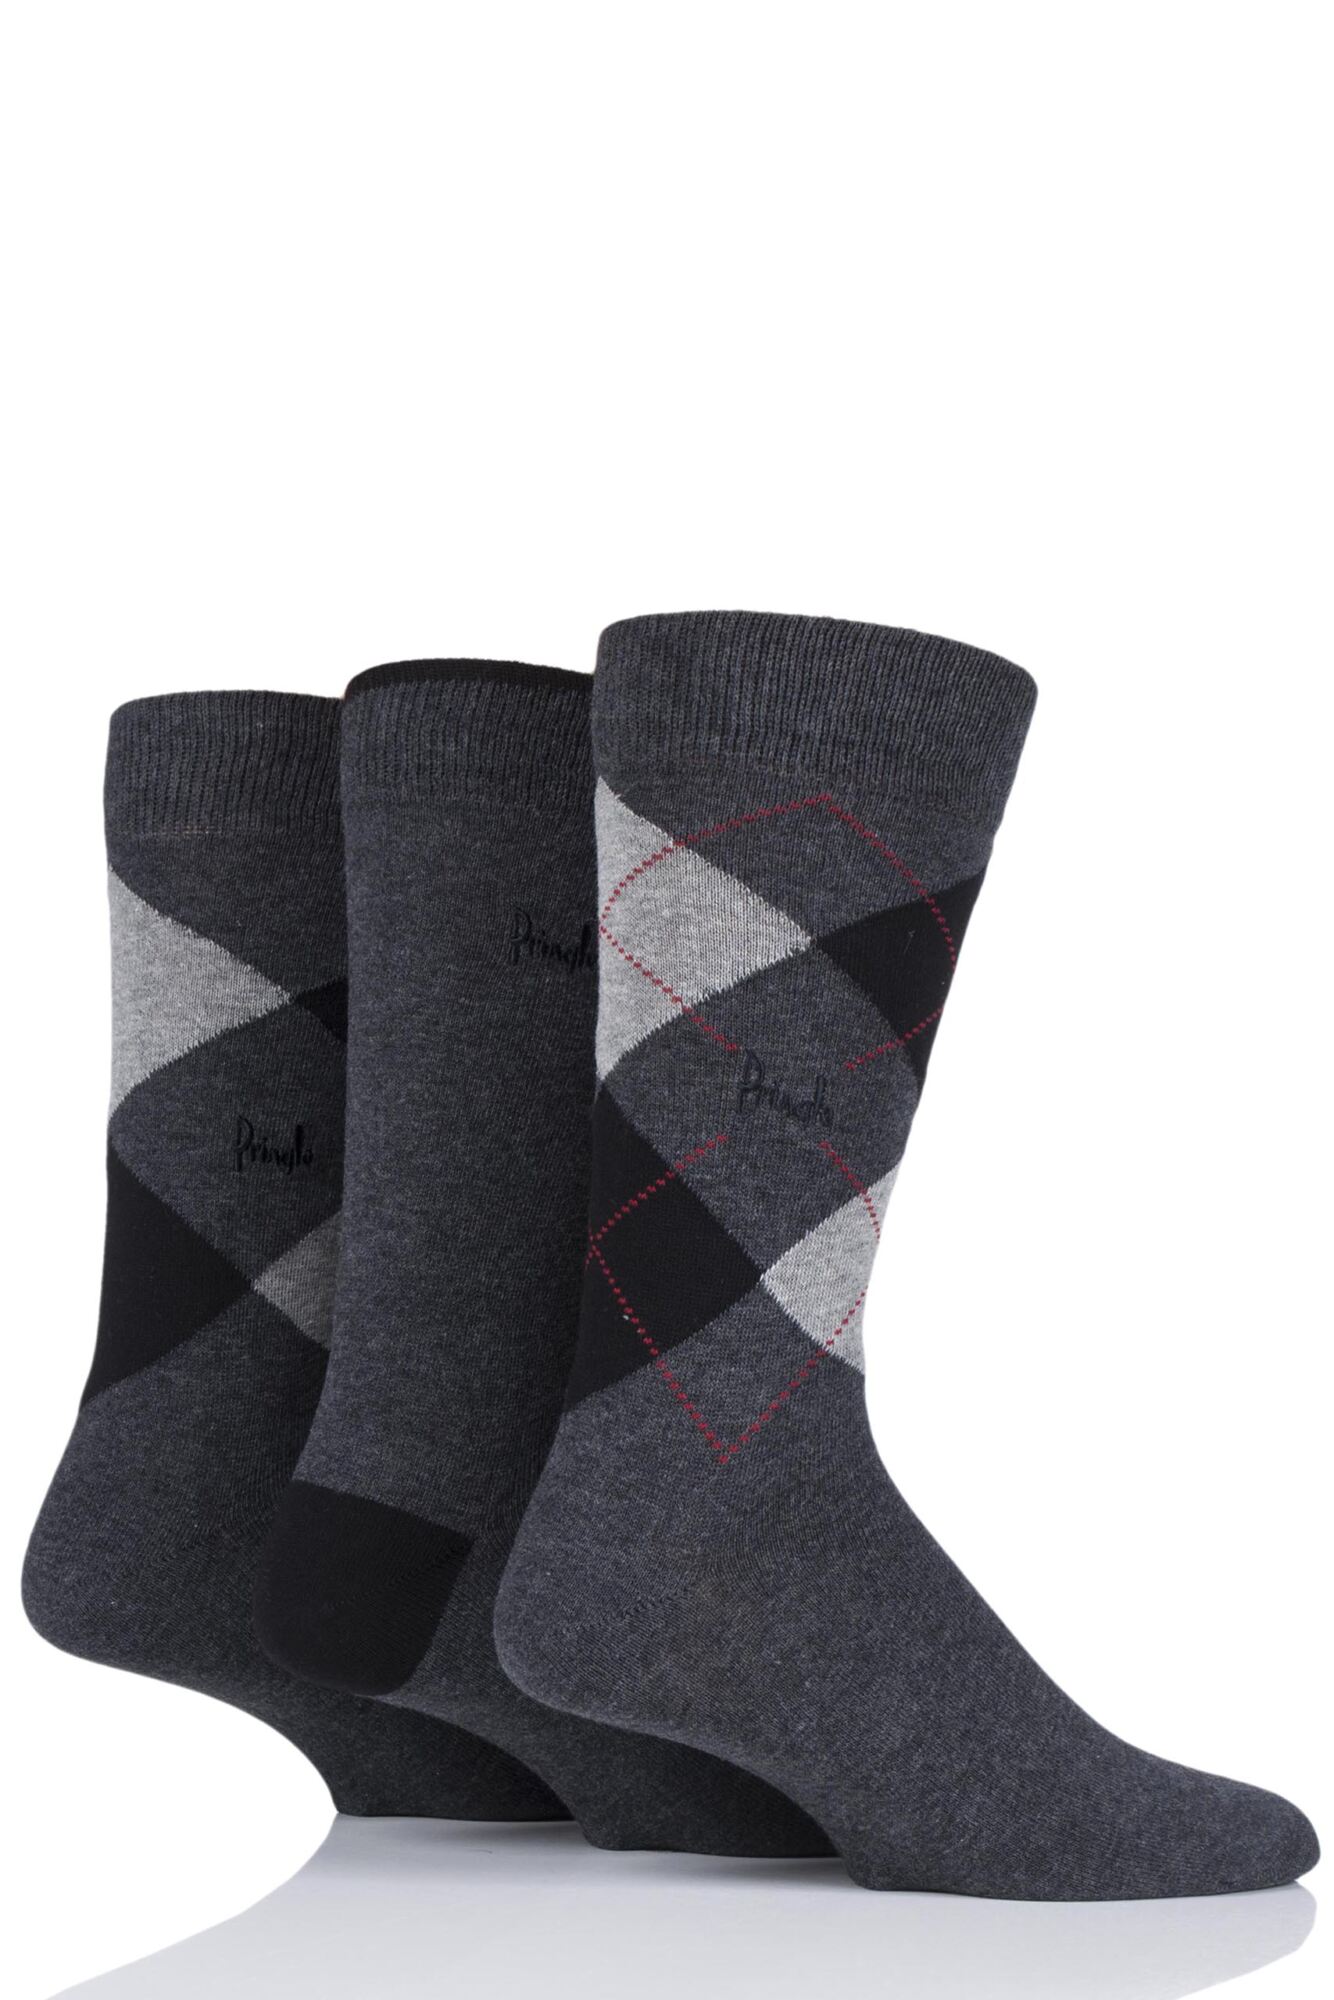 3 Pair New Waverley Argyle Patterned and Plain Socks Men's - Pringle